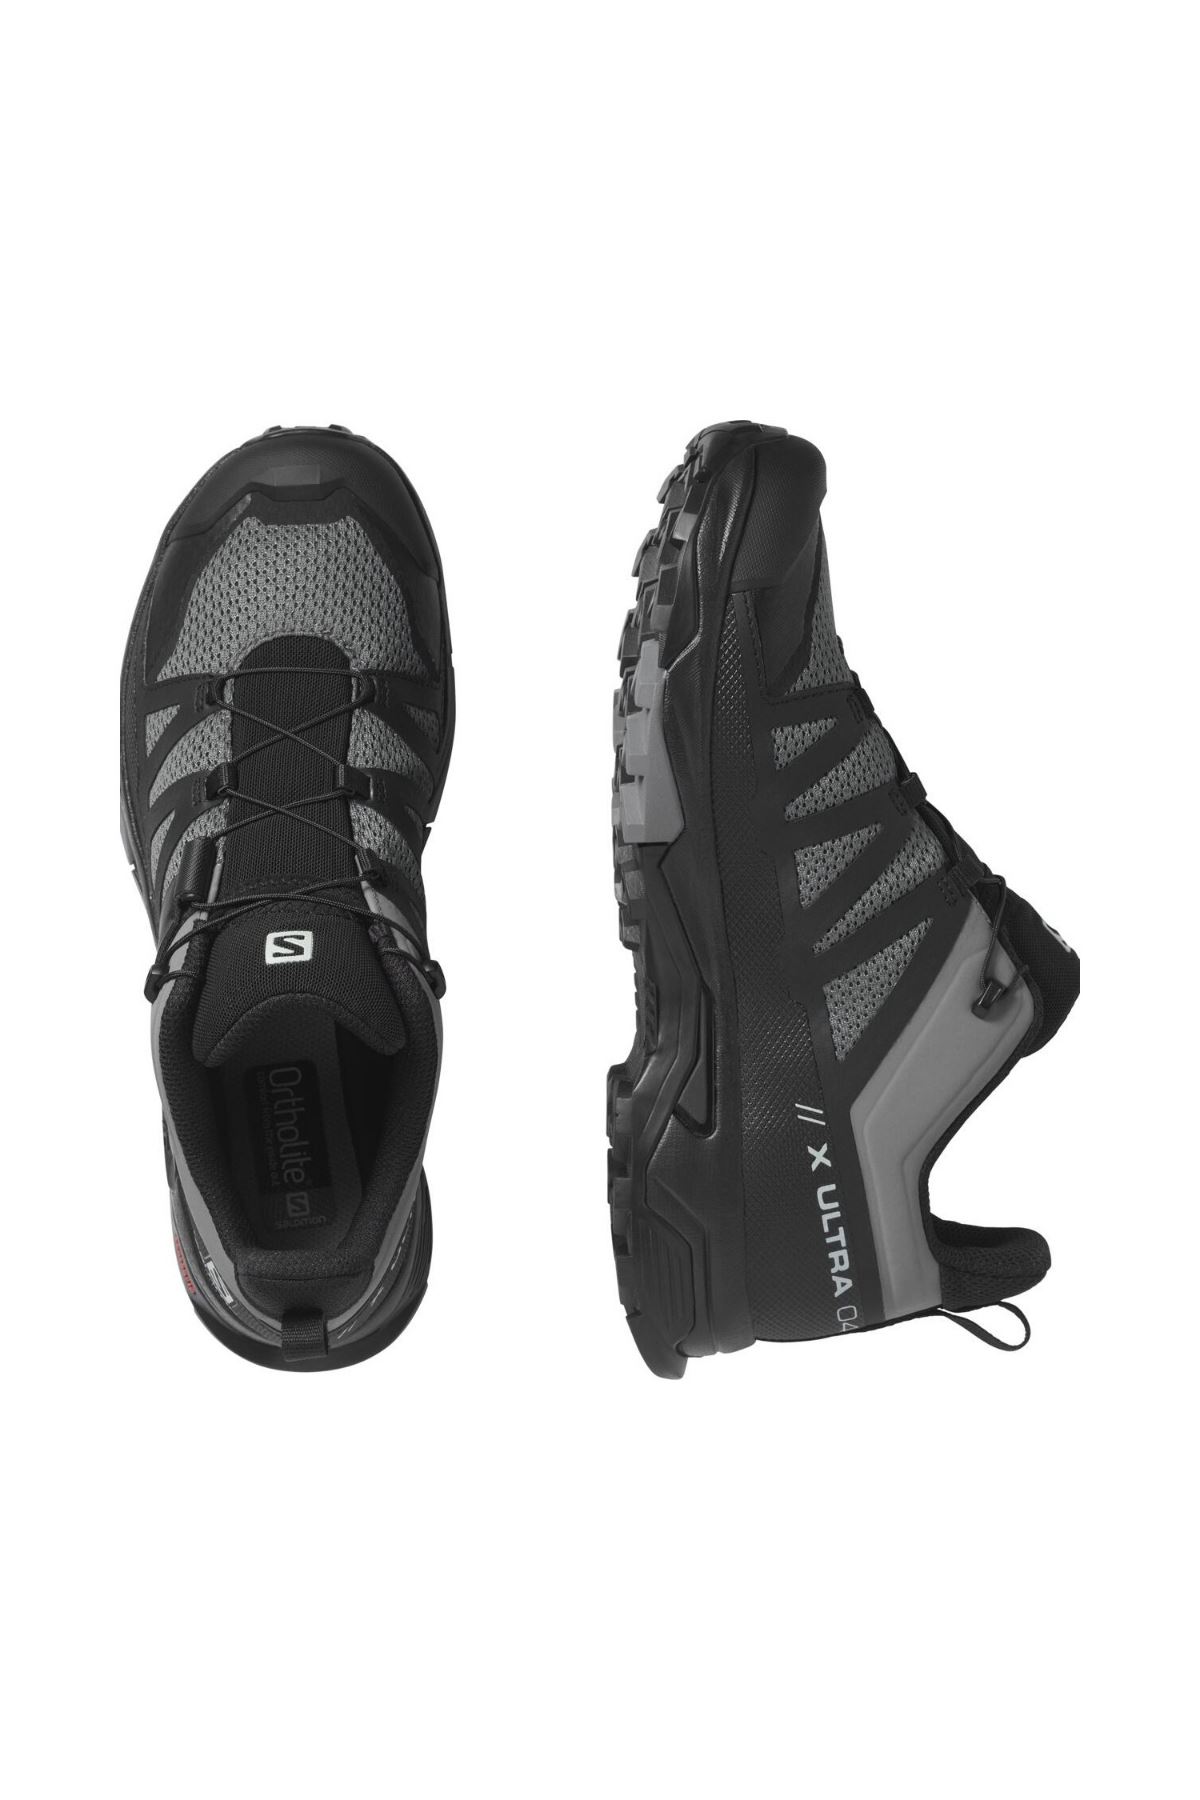 X Ultra 4 Erkek Siyah Spor Ayakkabı - L41385600